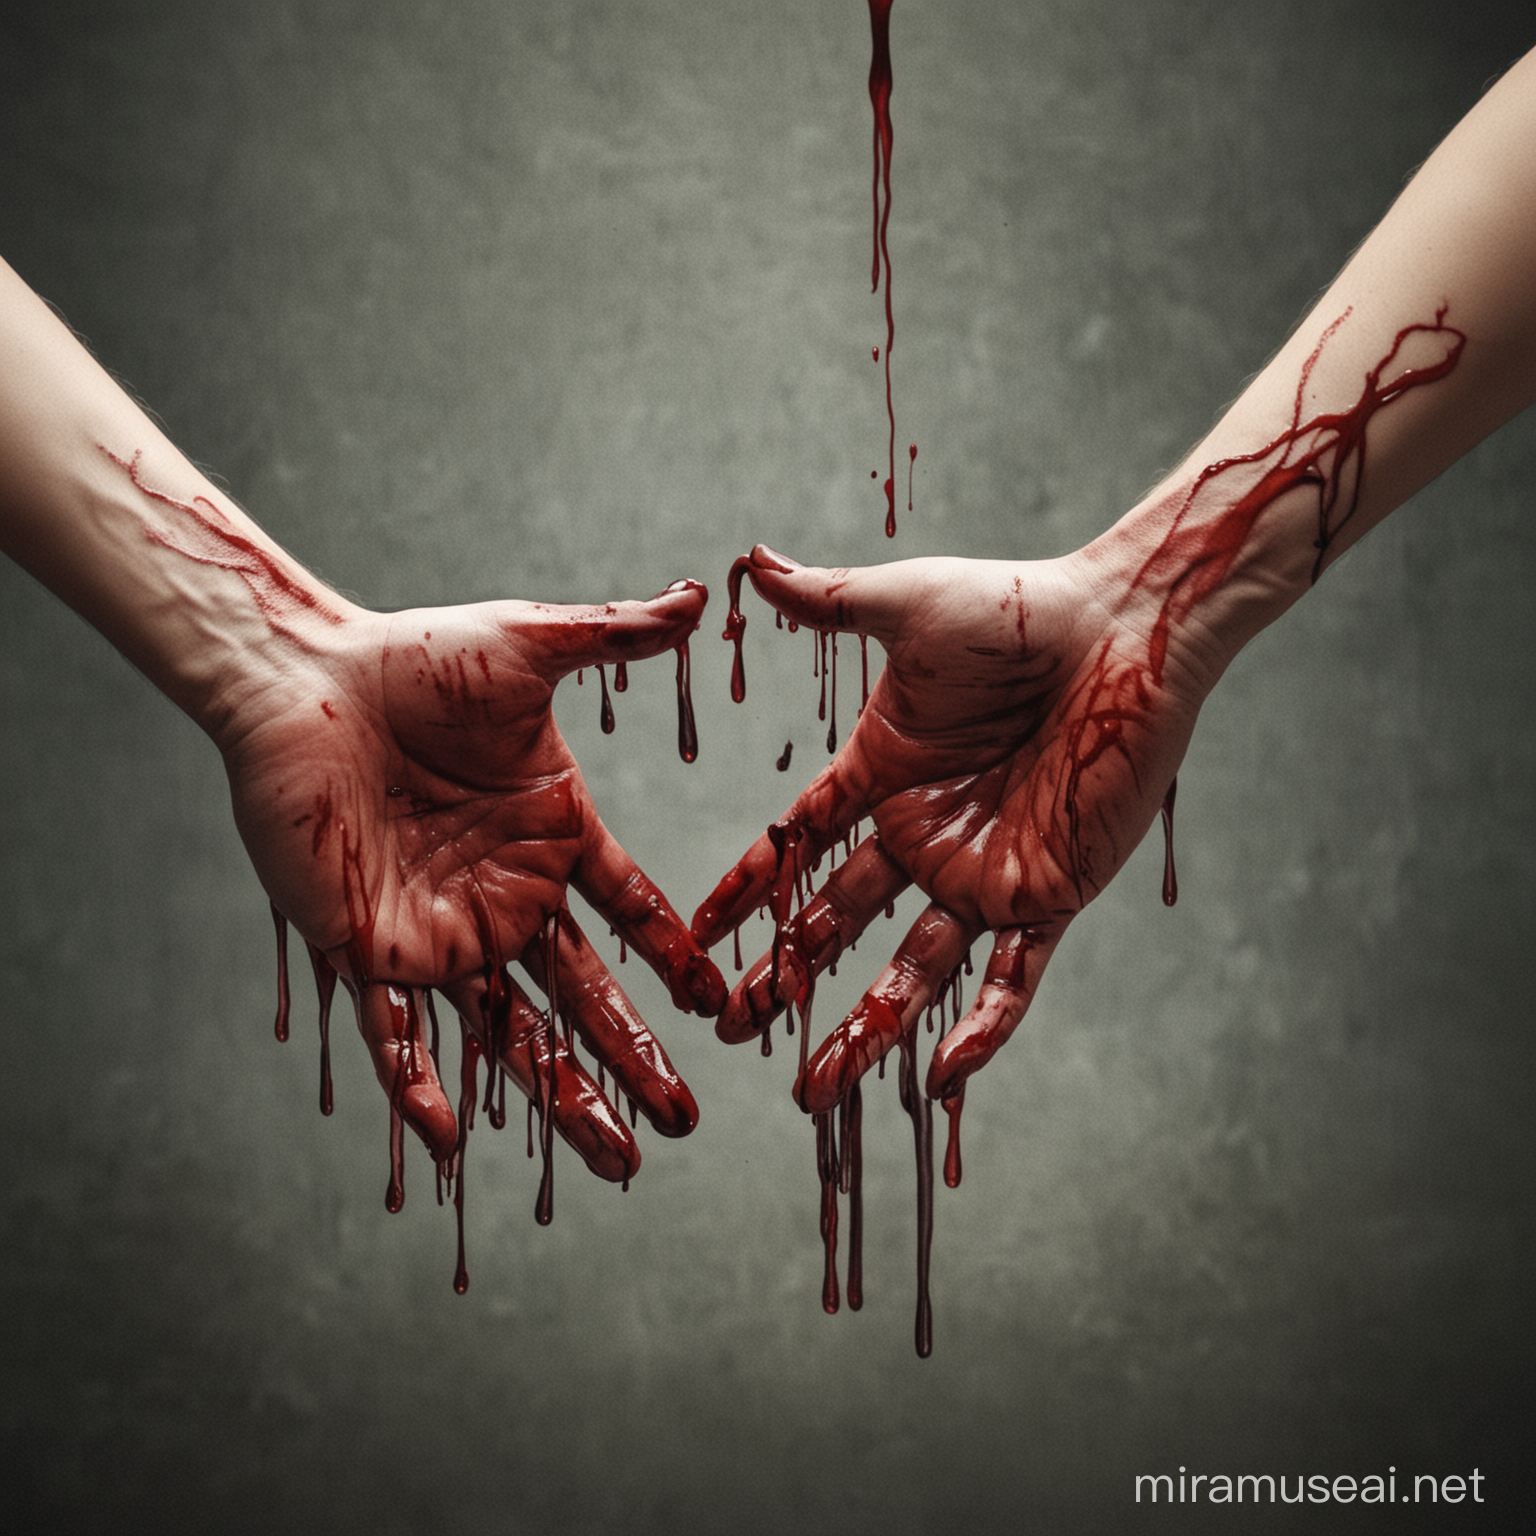 Hands Covered in Blood Crime Scene Investigation